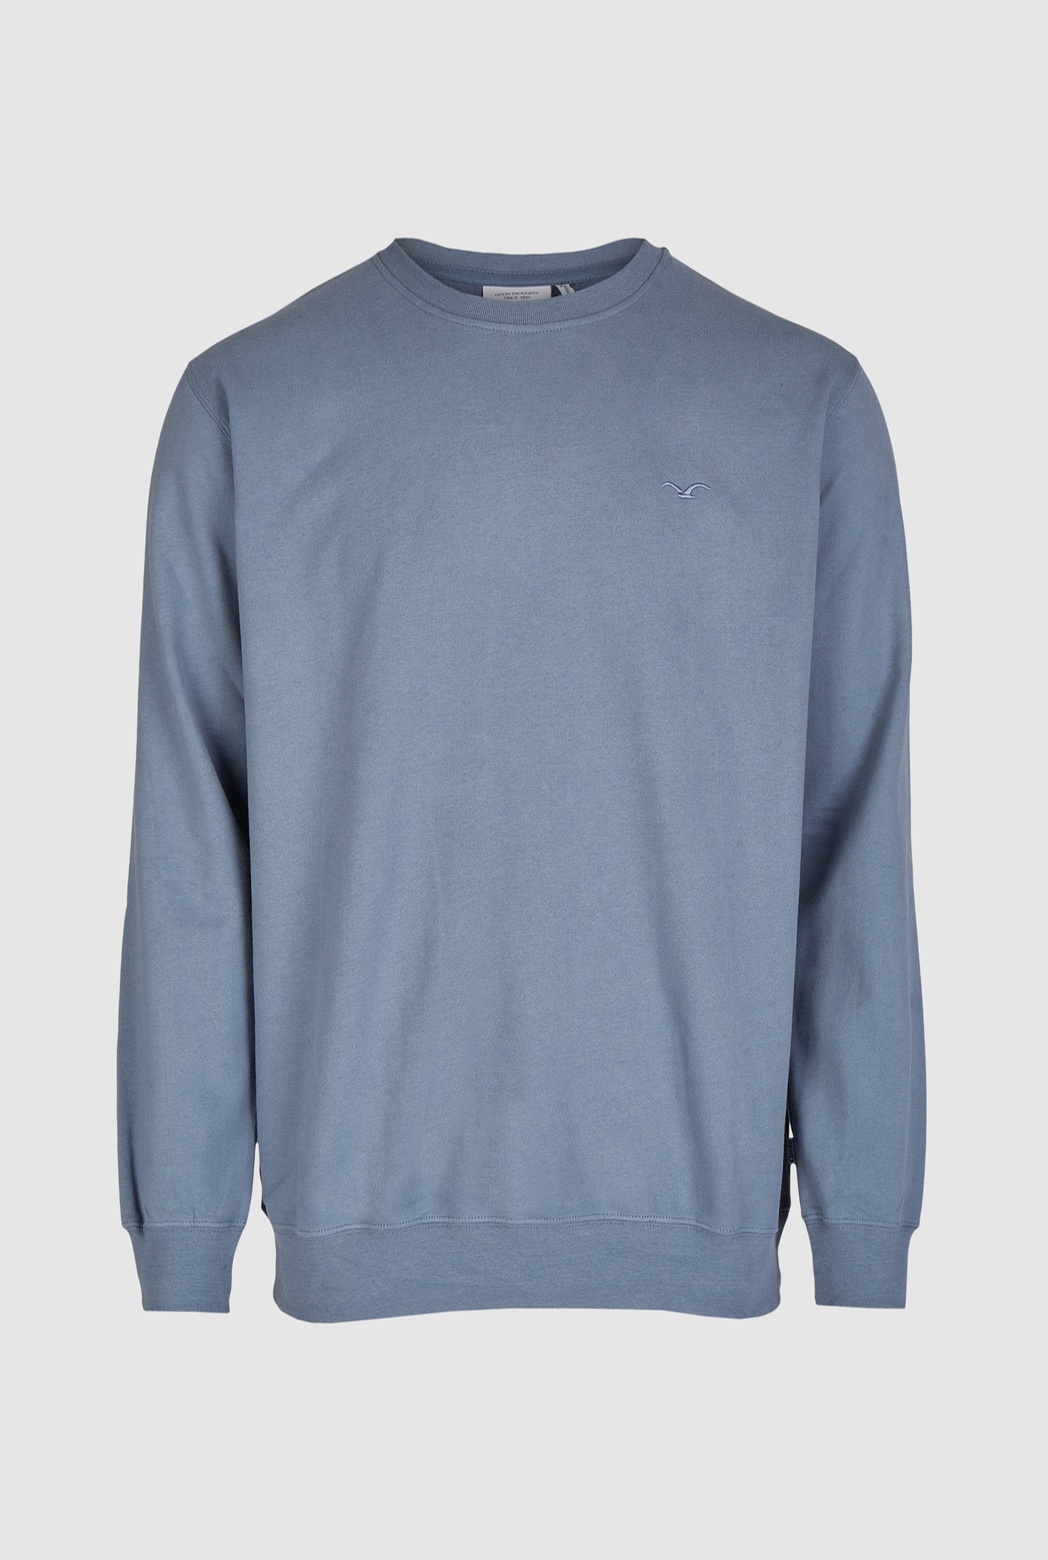 Cleptomanicx veganes Sweatshirt CREWNECK LIGULL in blau | Le Shop Vegan -  vegane Mode und Accessoires